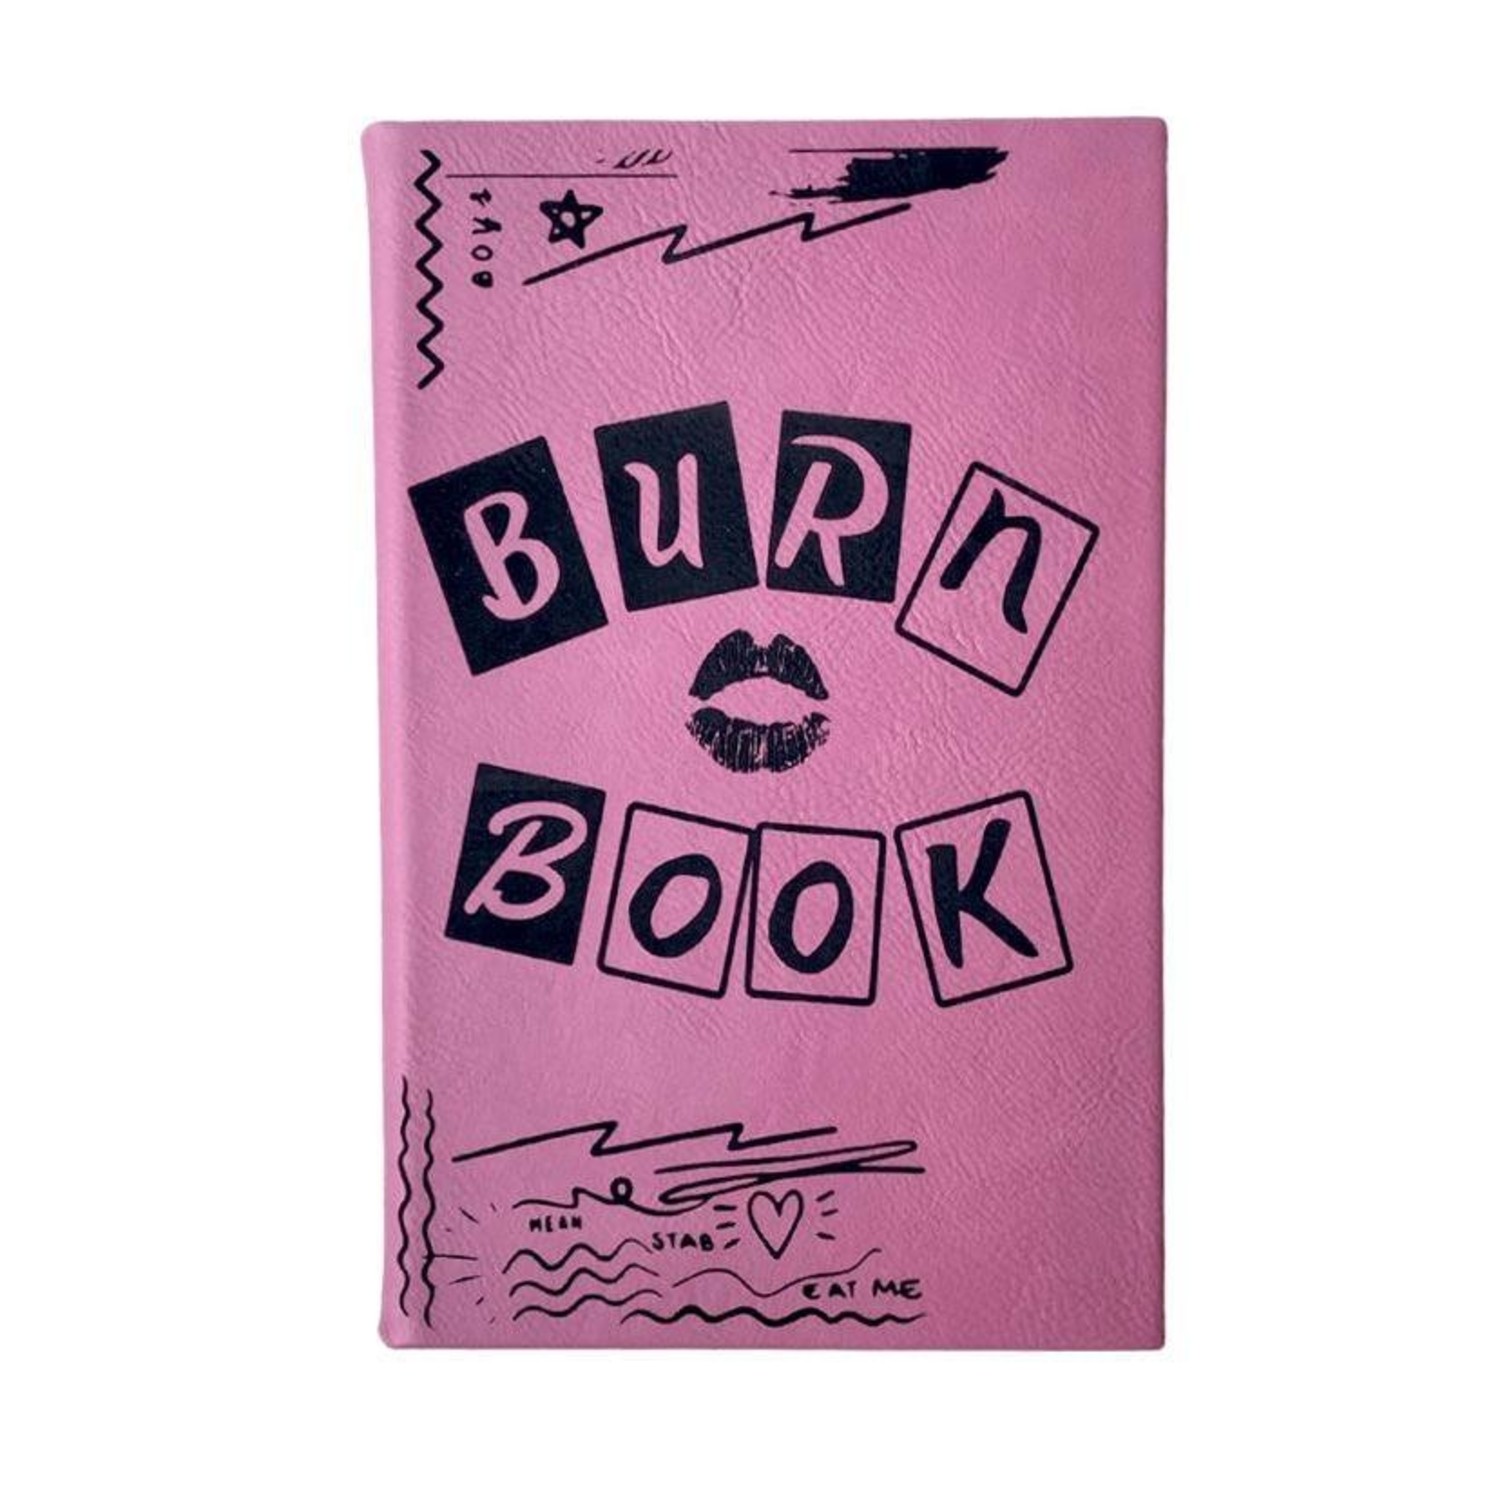 Bright Pink Mean Girls Burn Book Socks